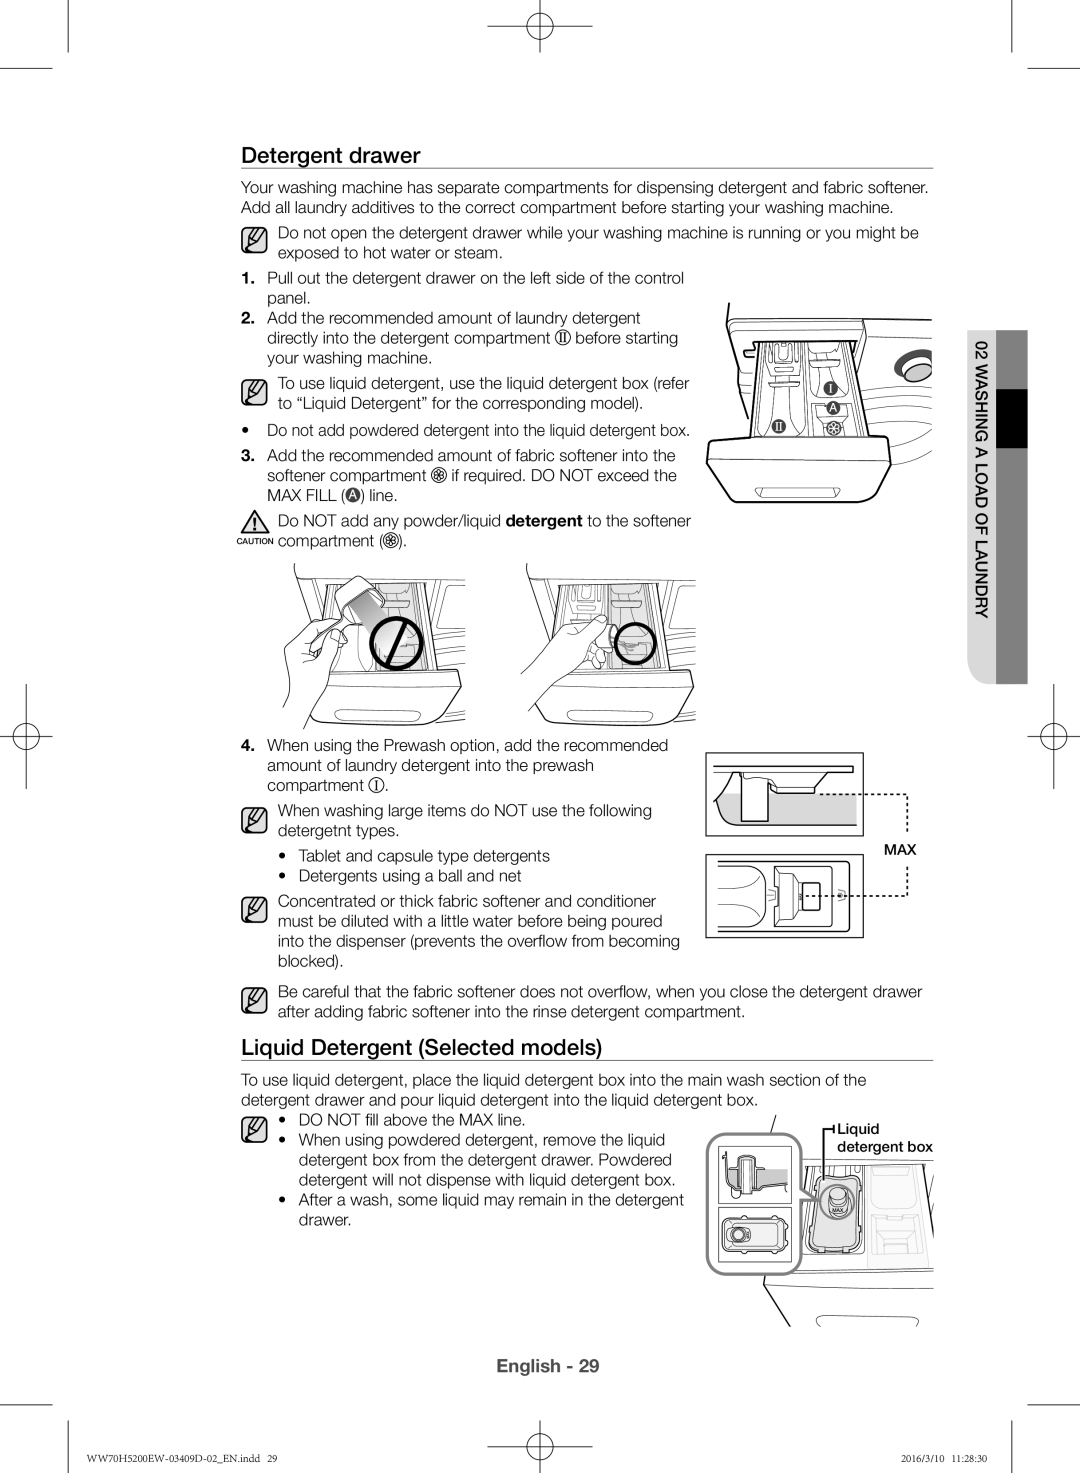 Samsung WW70H5200EW/KJ manual Detergent drawer, Liquid Detergent Selected models 